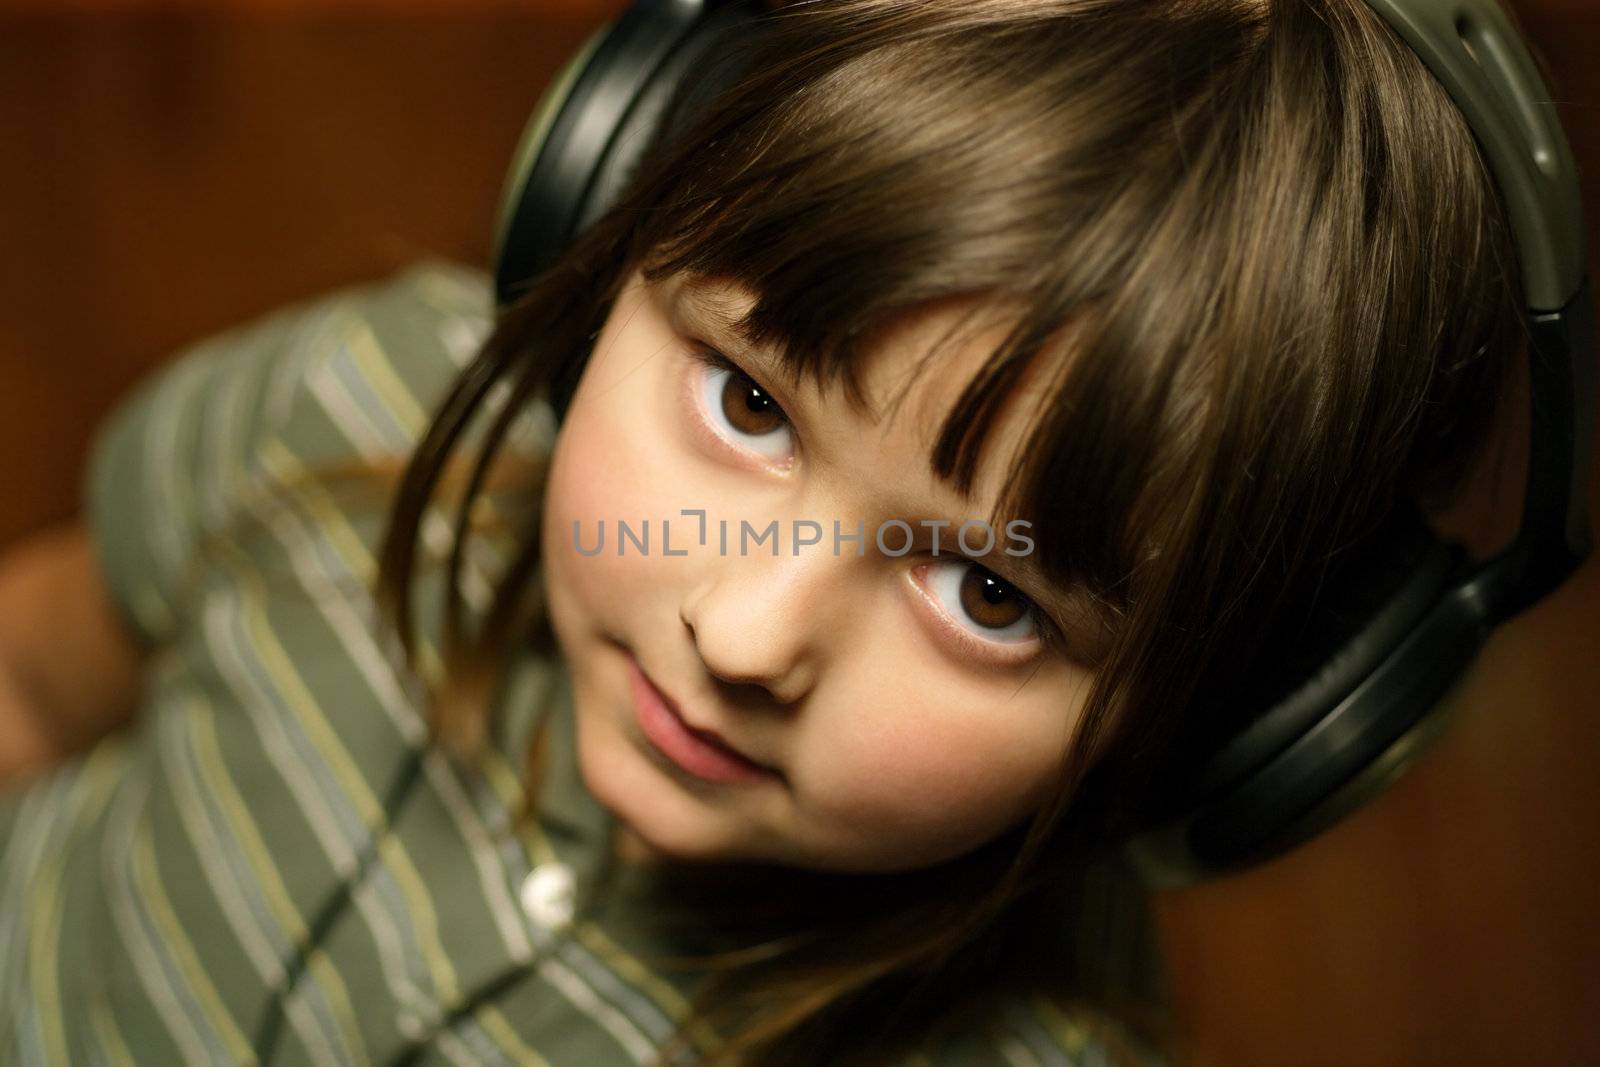 Adorable five year old wearing headphones.
